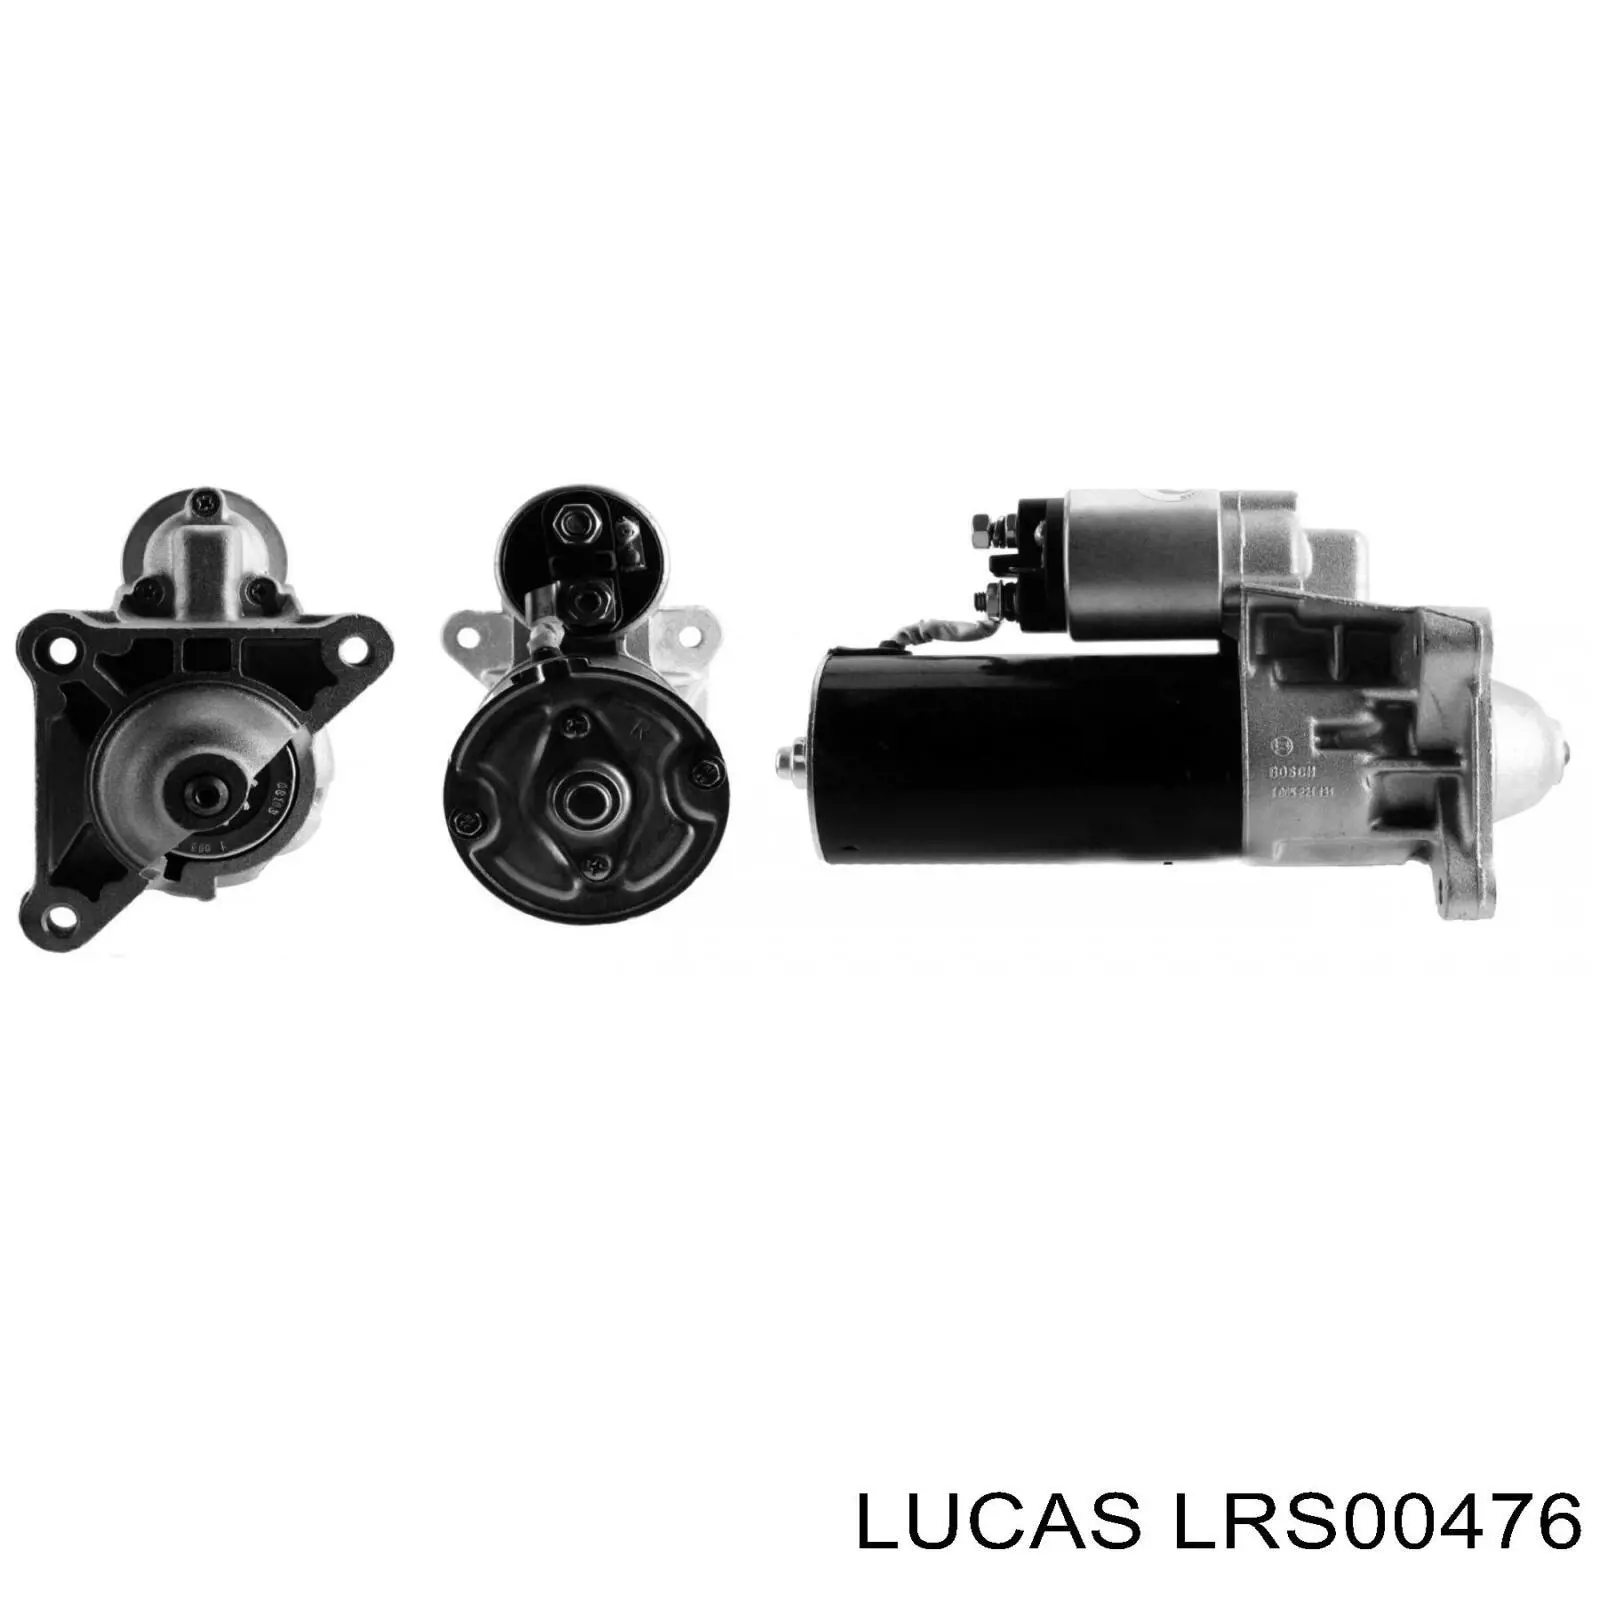 LRS00476 Lucas motor de arranque